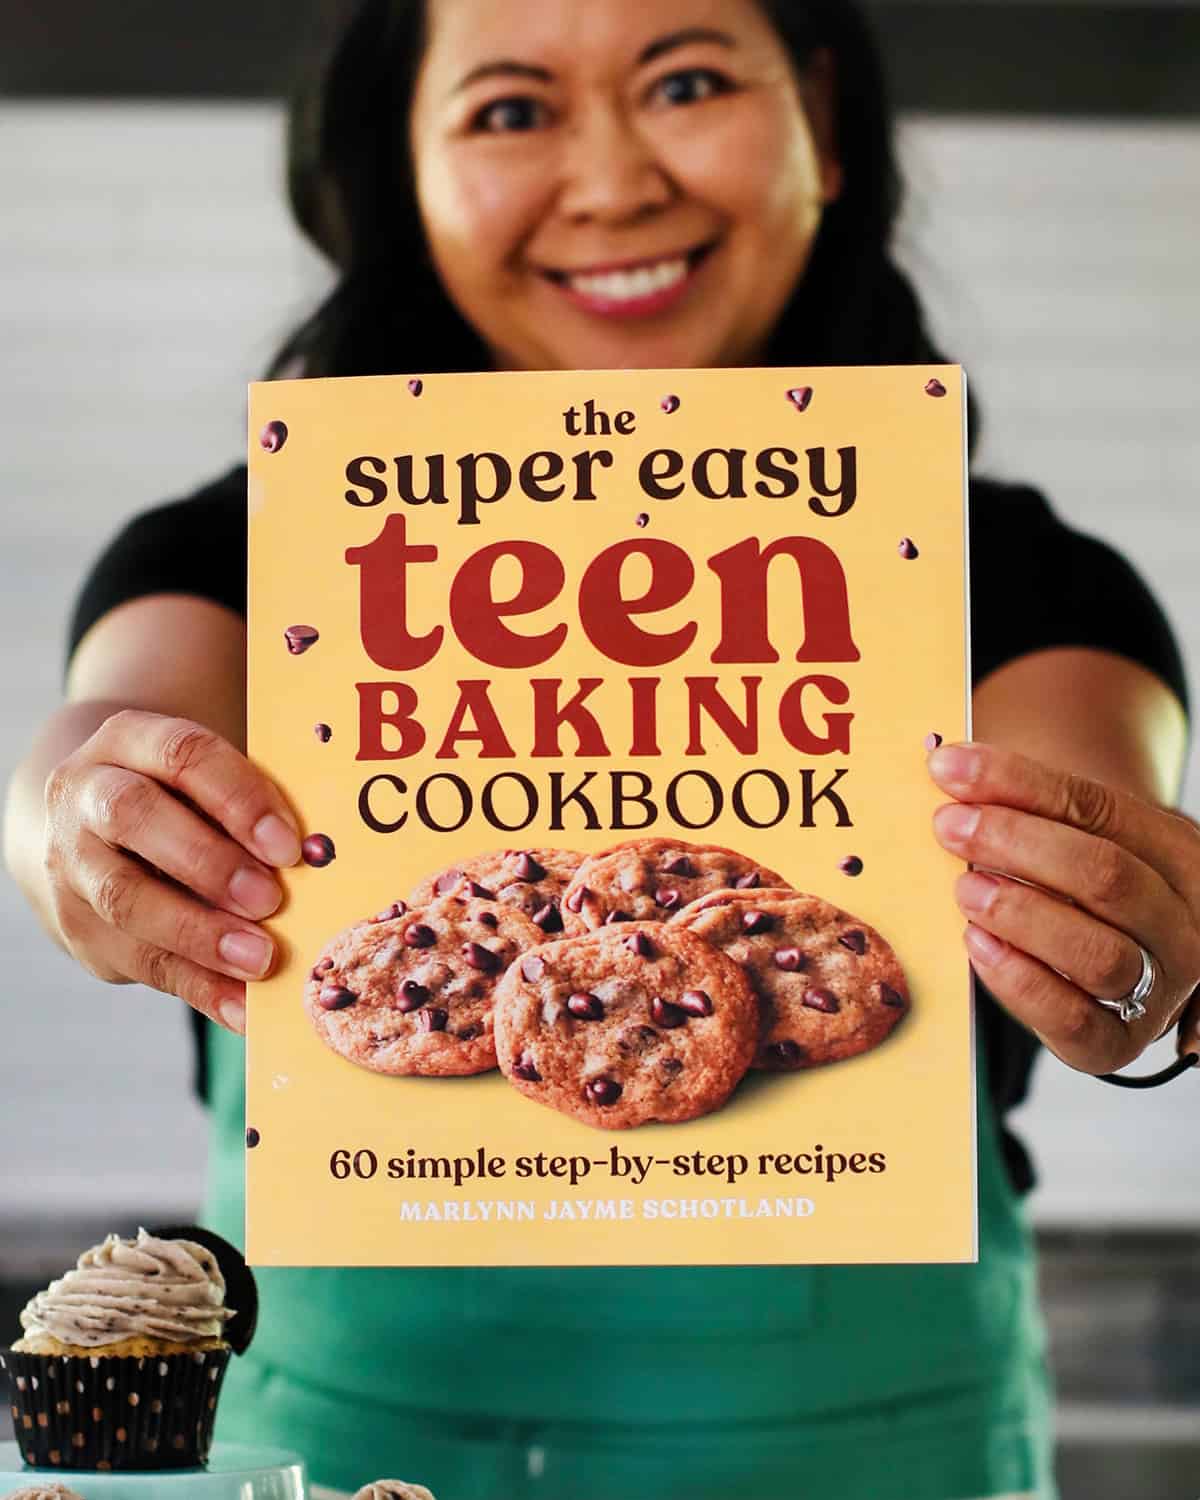 Marlynn trzyma książkę kucharską Super Easy Teen Cookbook